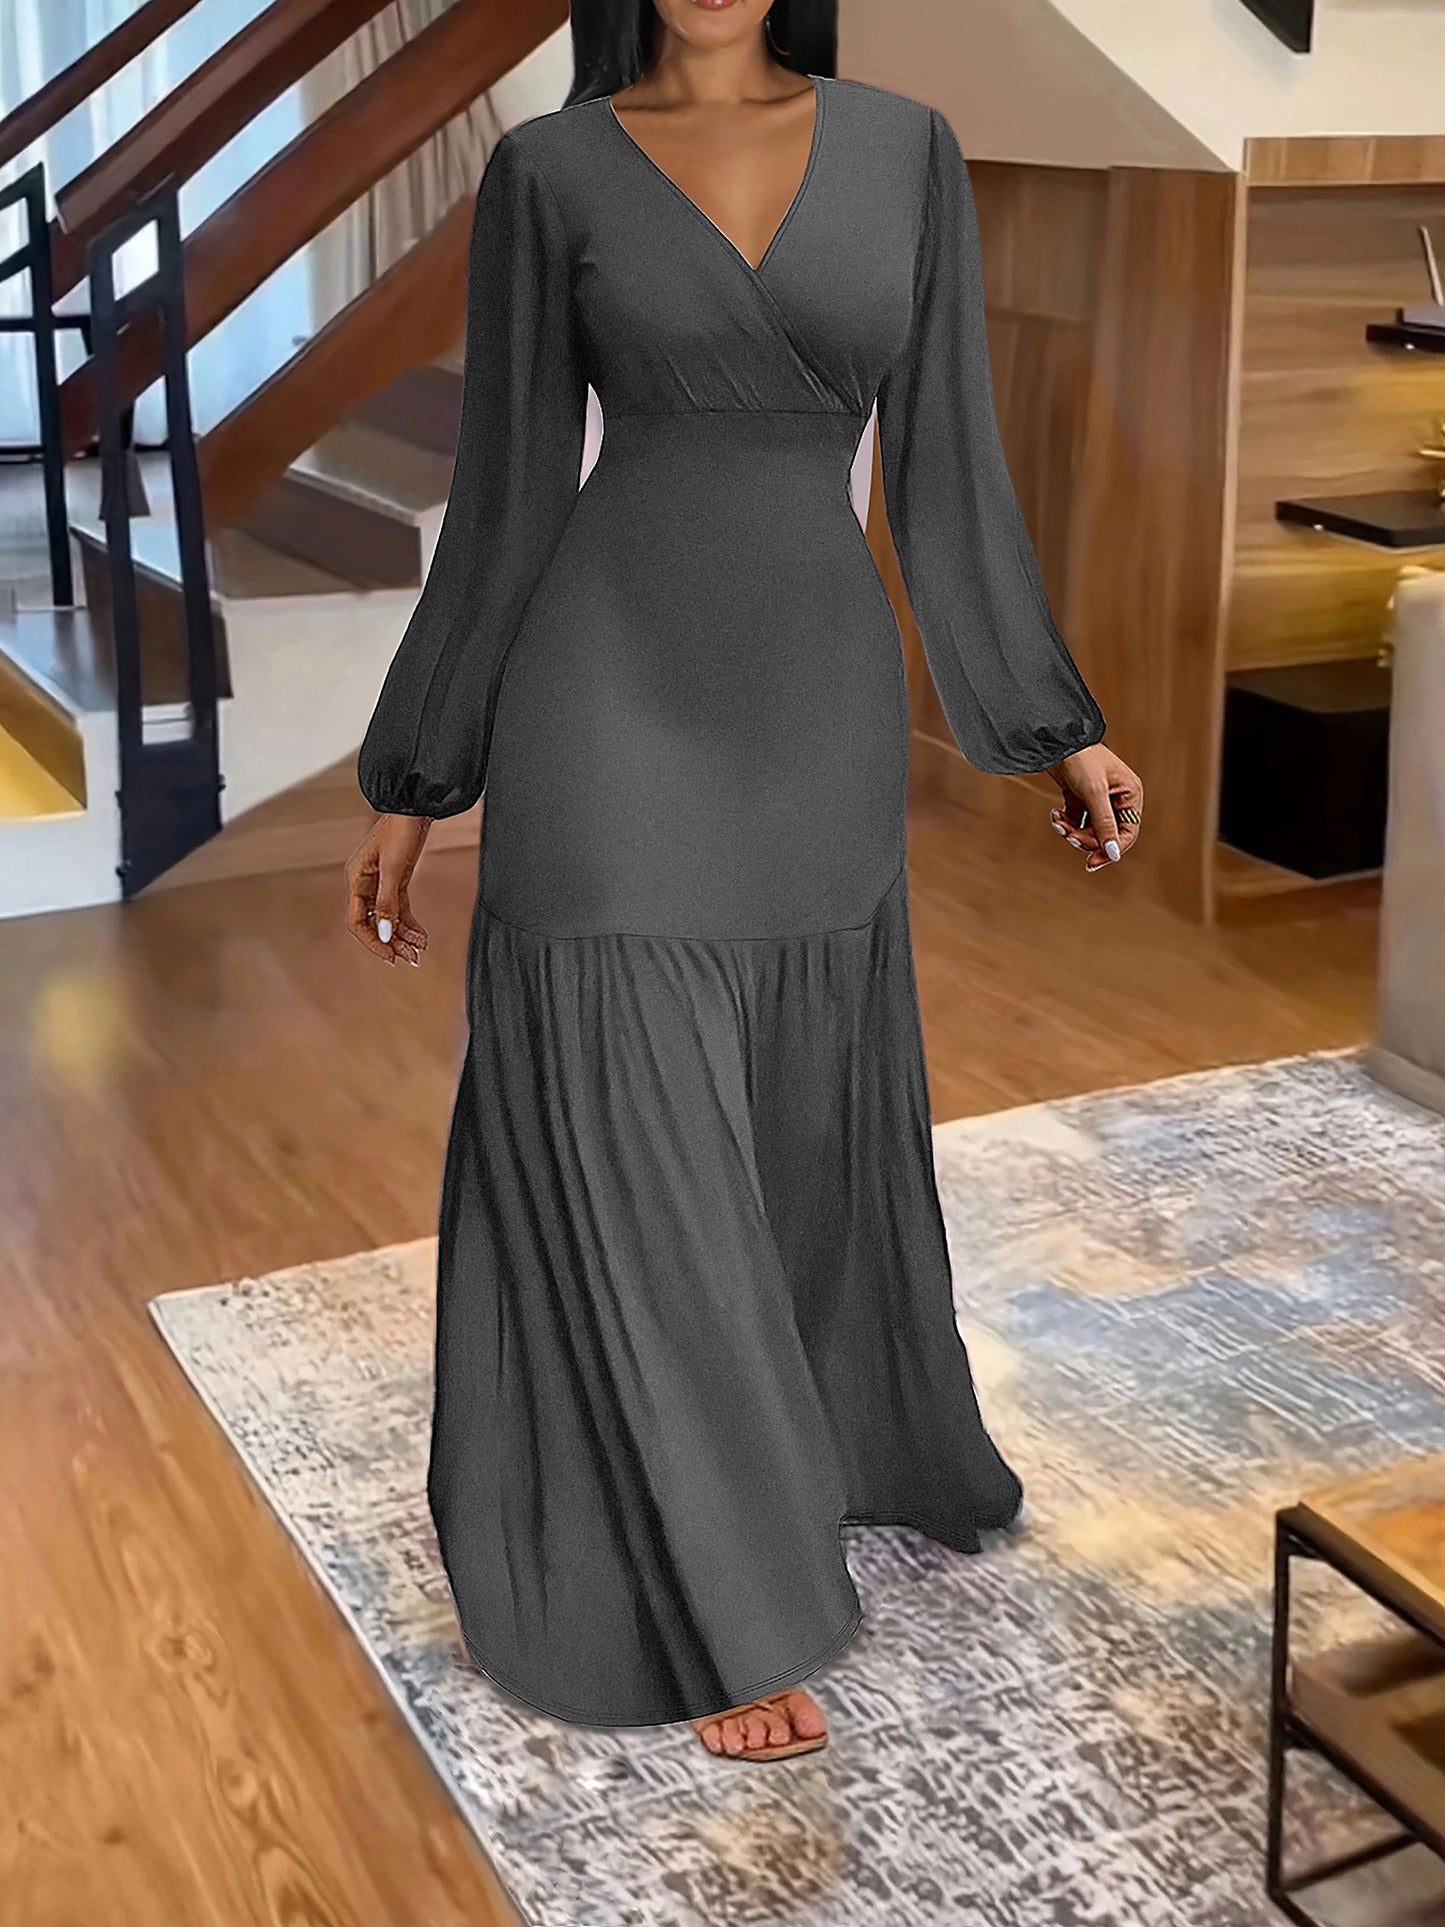 xieyinshe  Ruched Solid Dress, Elegant V Neck Lantern Long Sleeve Maxi Party Dress, Women's Clothing